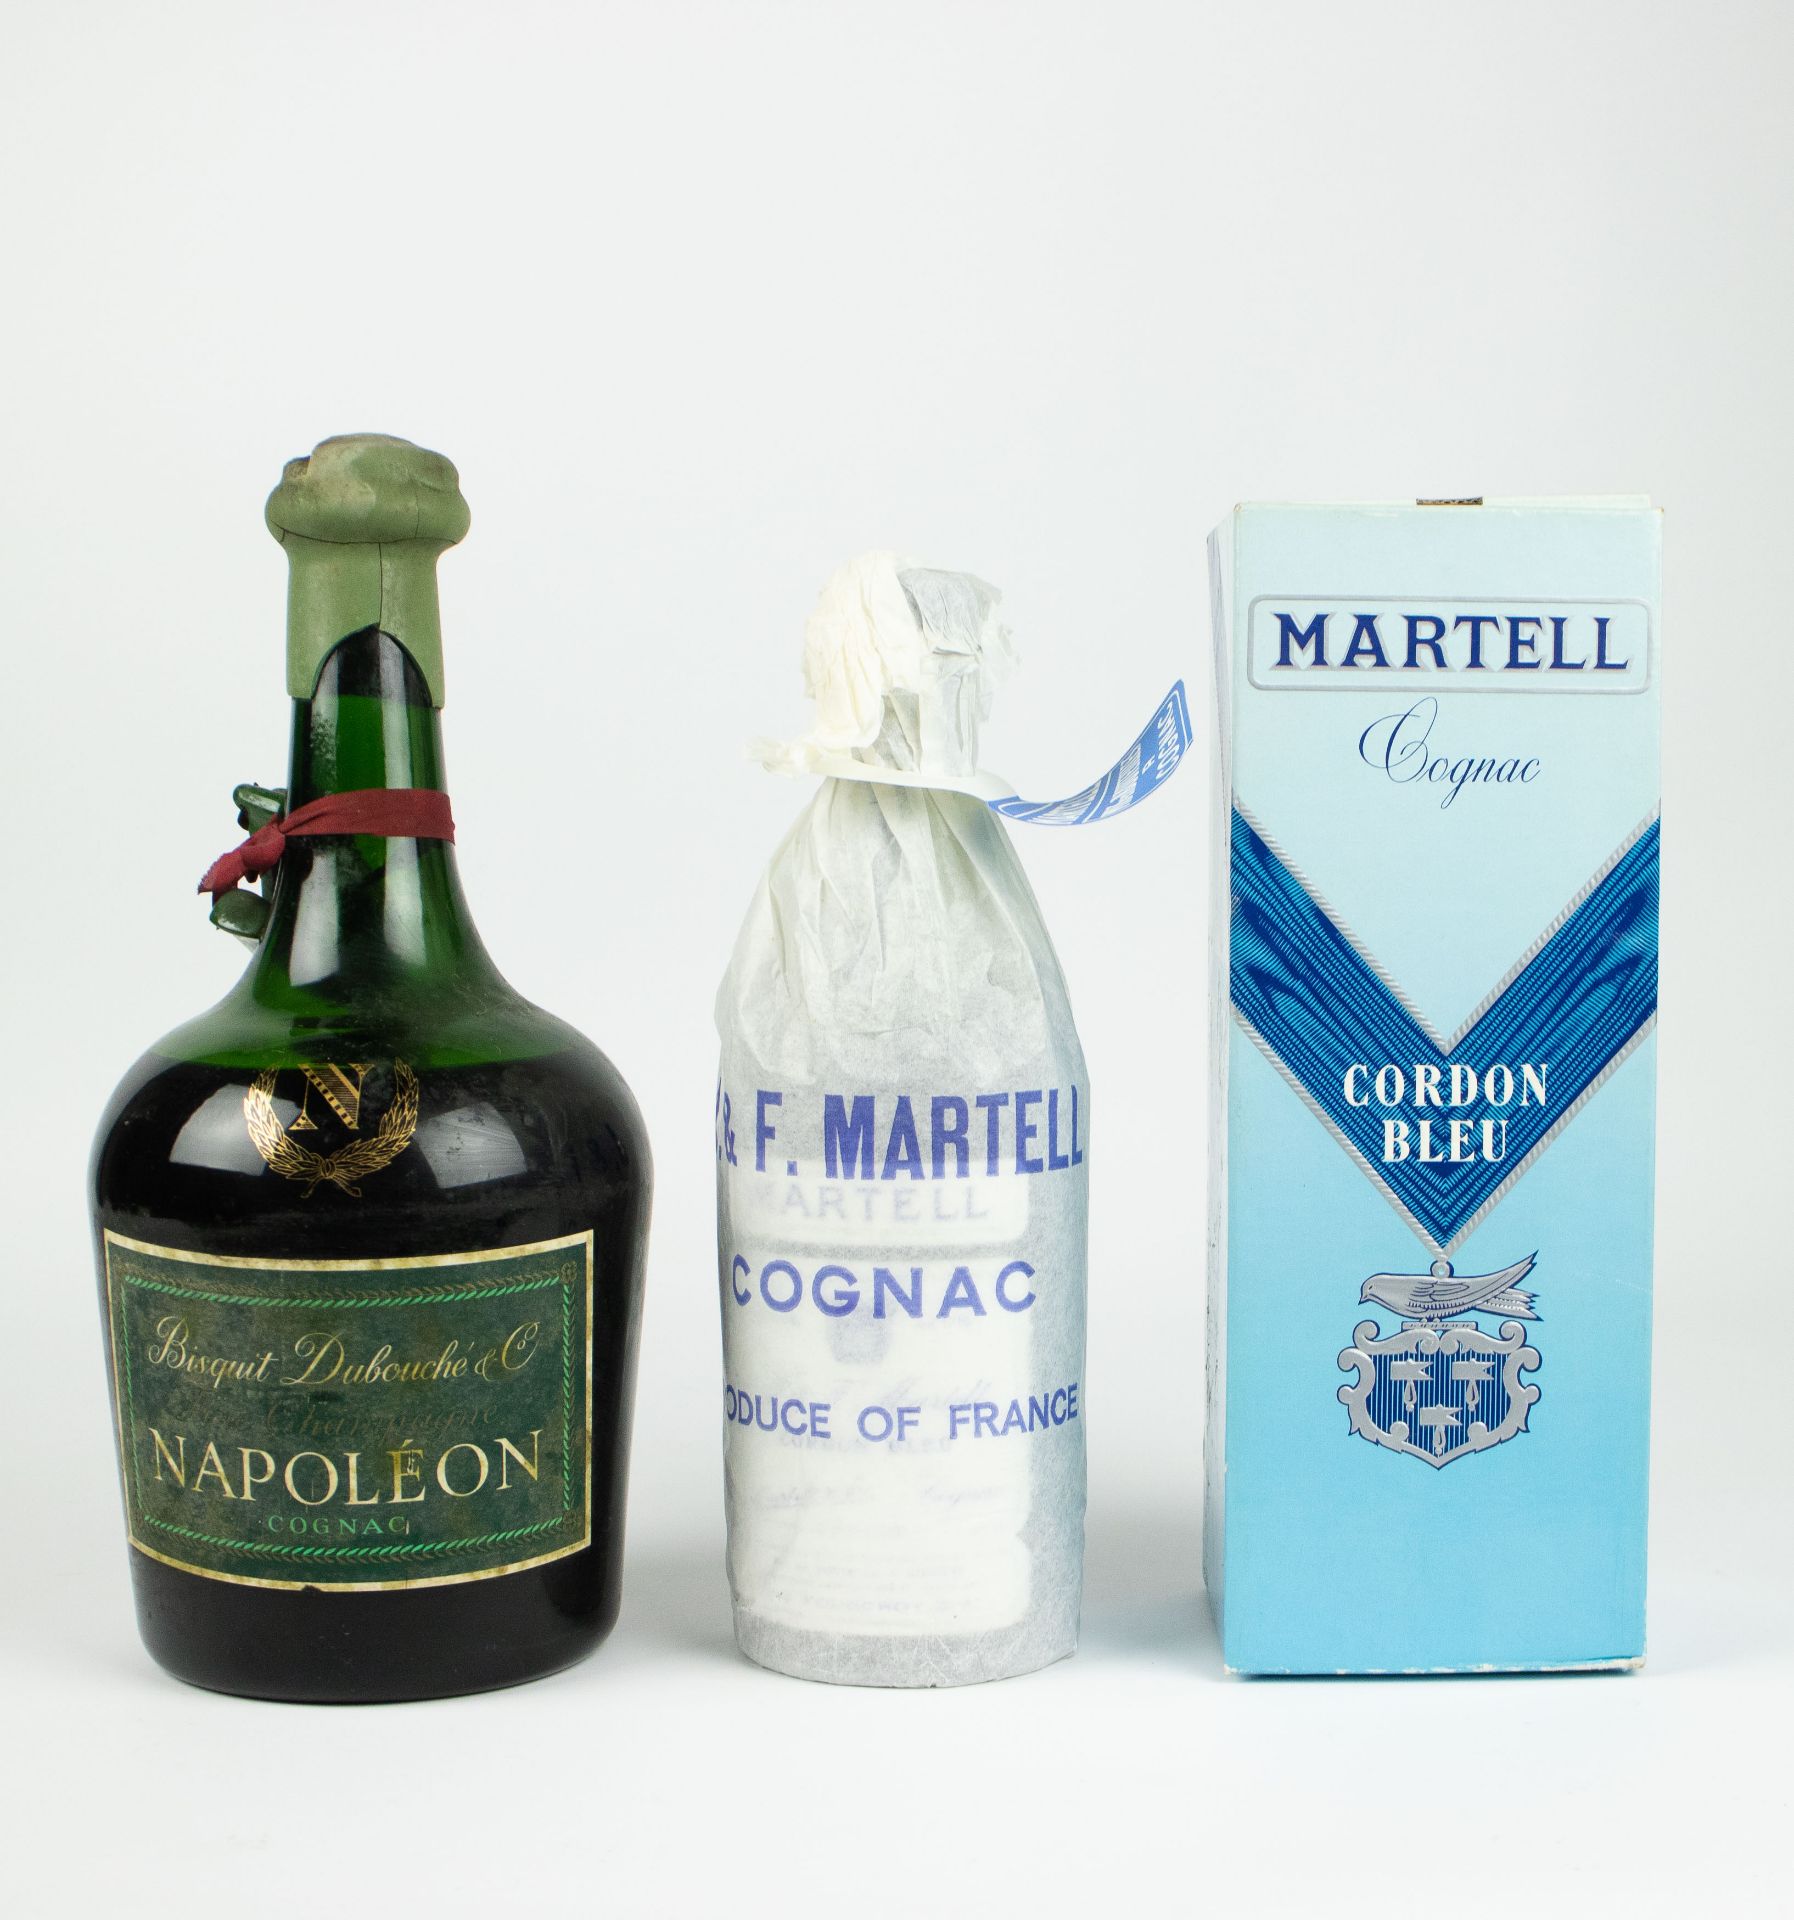 Napoleon Bisquit Cognac sixties and Martell Cognac Cordon Blue - Image 11 of 11